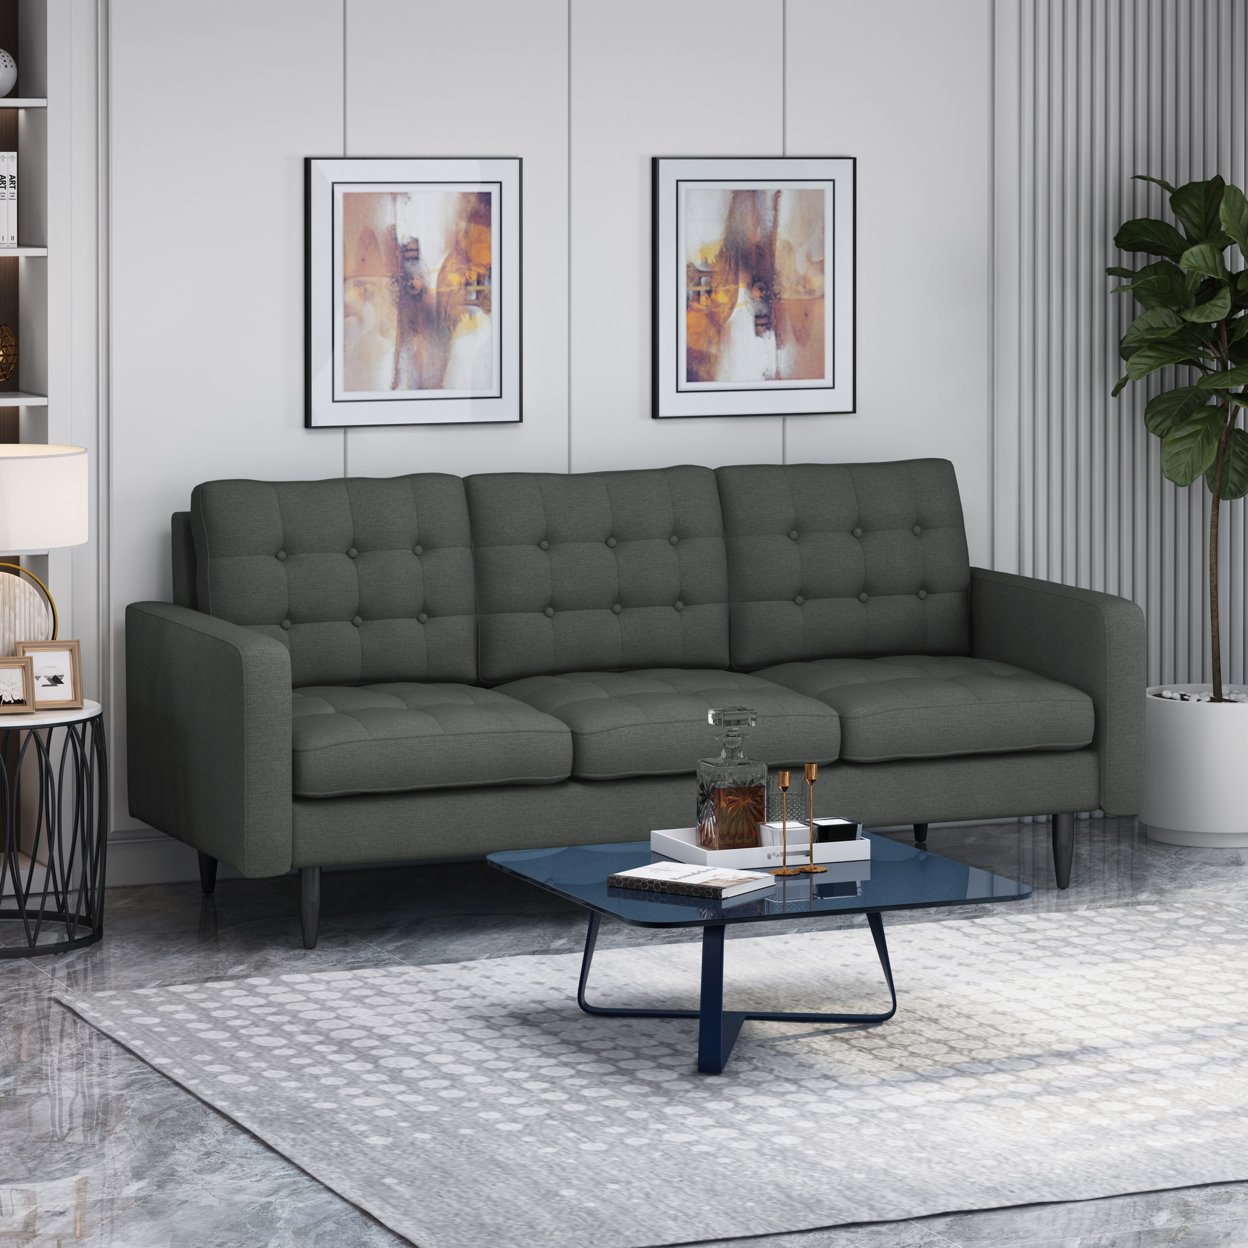 Jenny Contemporary Tufted Fabric 3 Seater Sofa - Dark Gray + Dark Brown